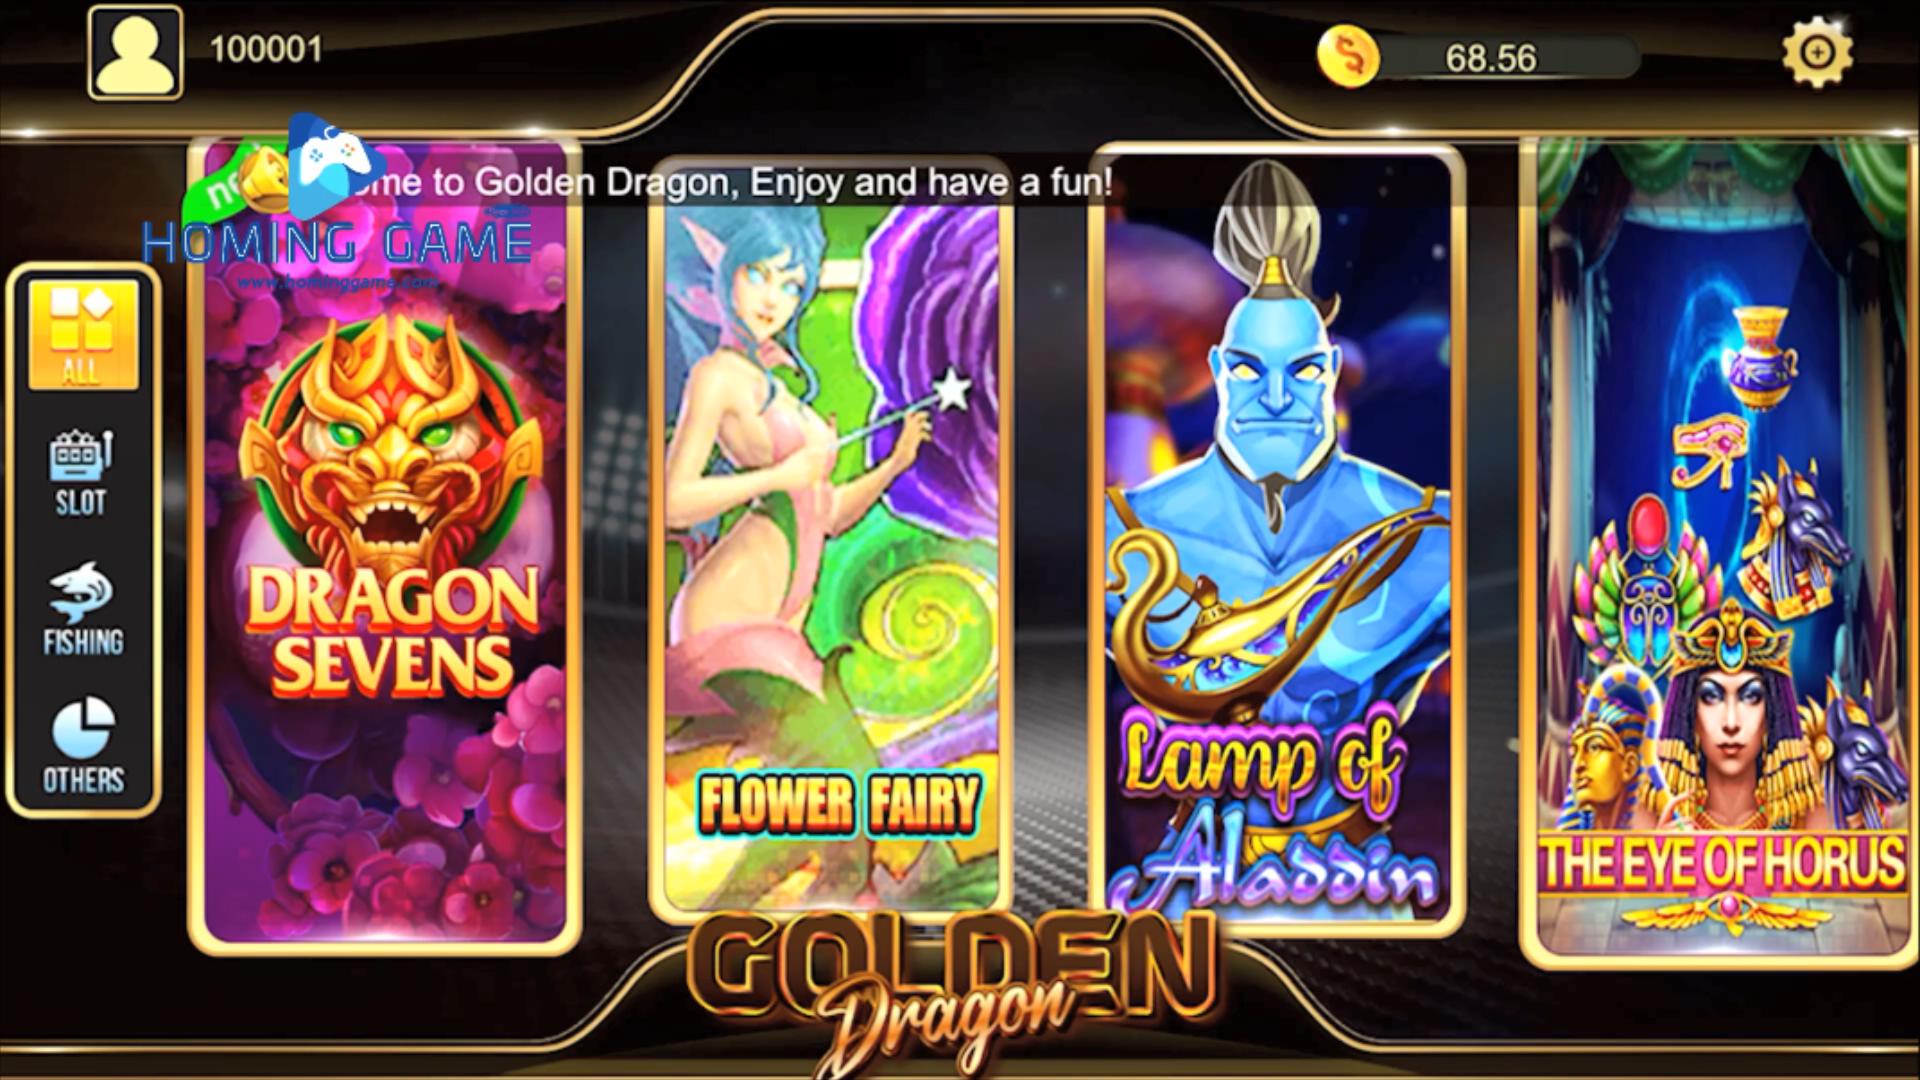 HomingGame's Dragon Sevens | Wheel of Fortune | Online Golden Dragon Gaming